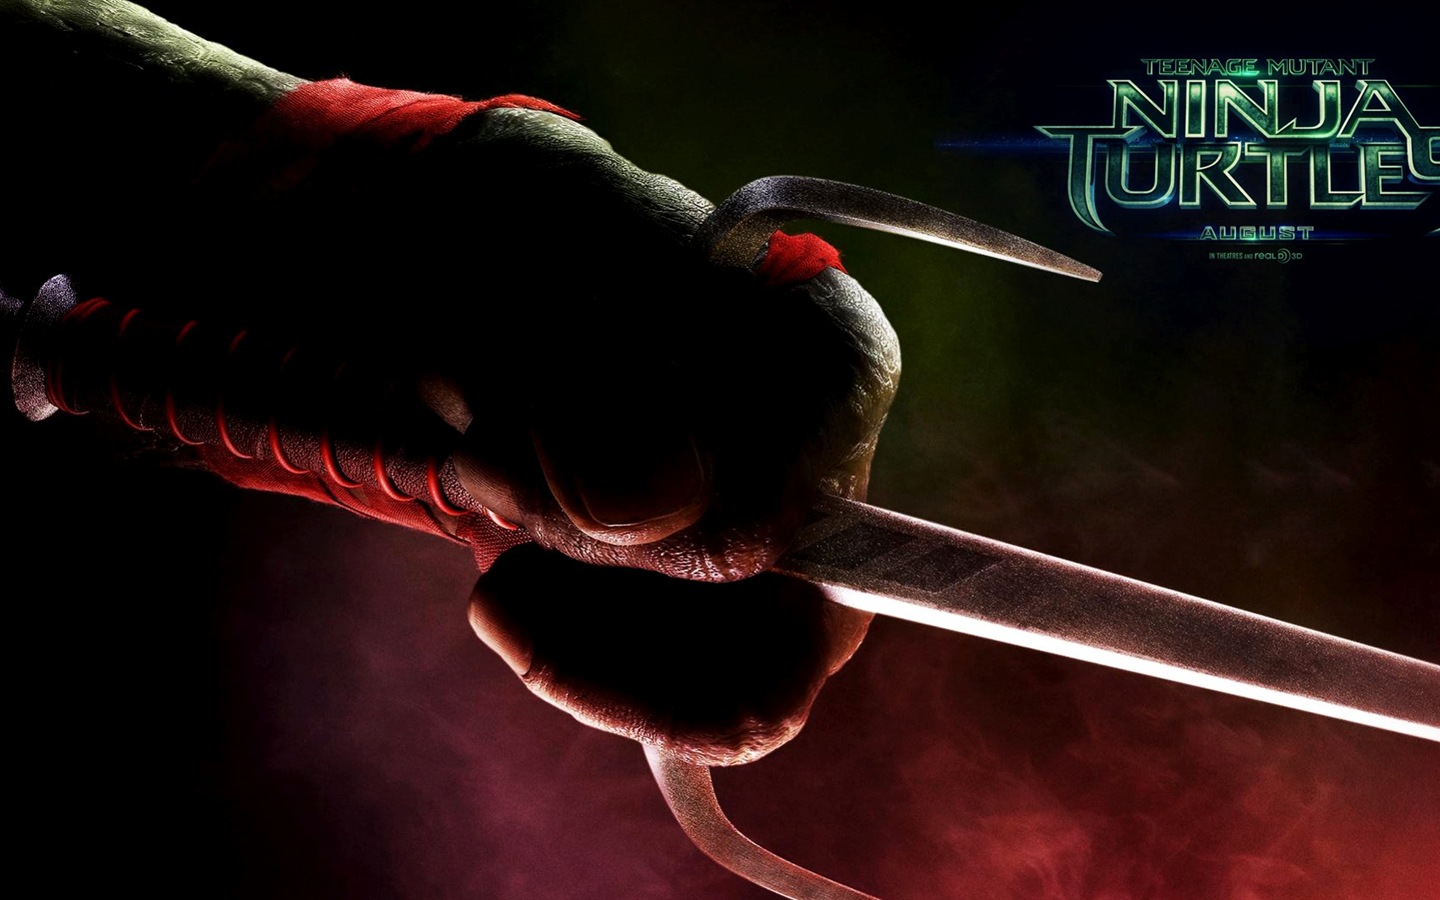 2014 Teenage Mutant Ninja Turtles HD movie wallpapers #5 - 1440x900